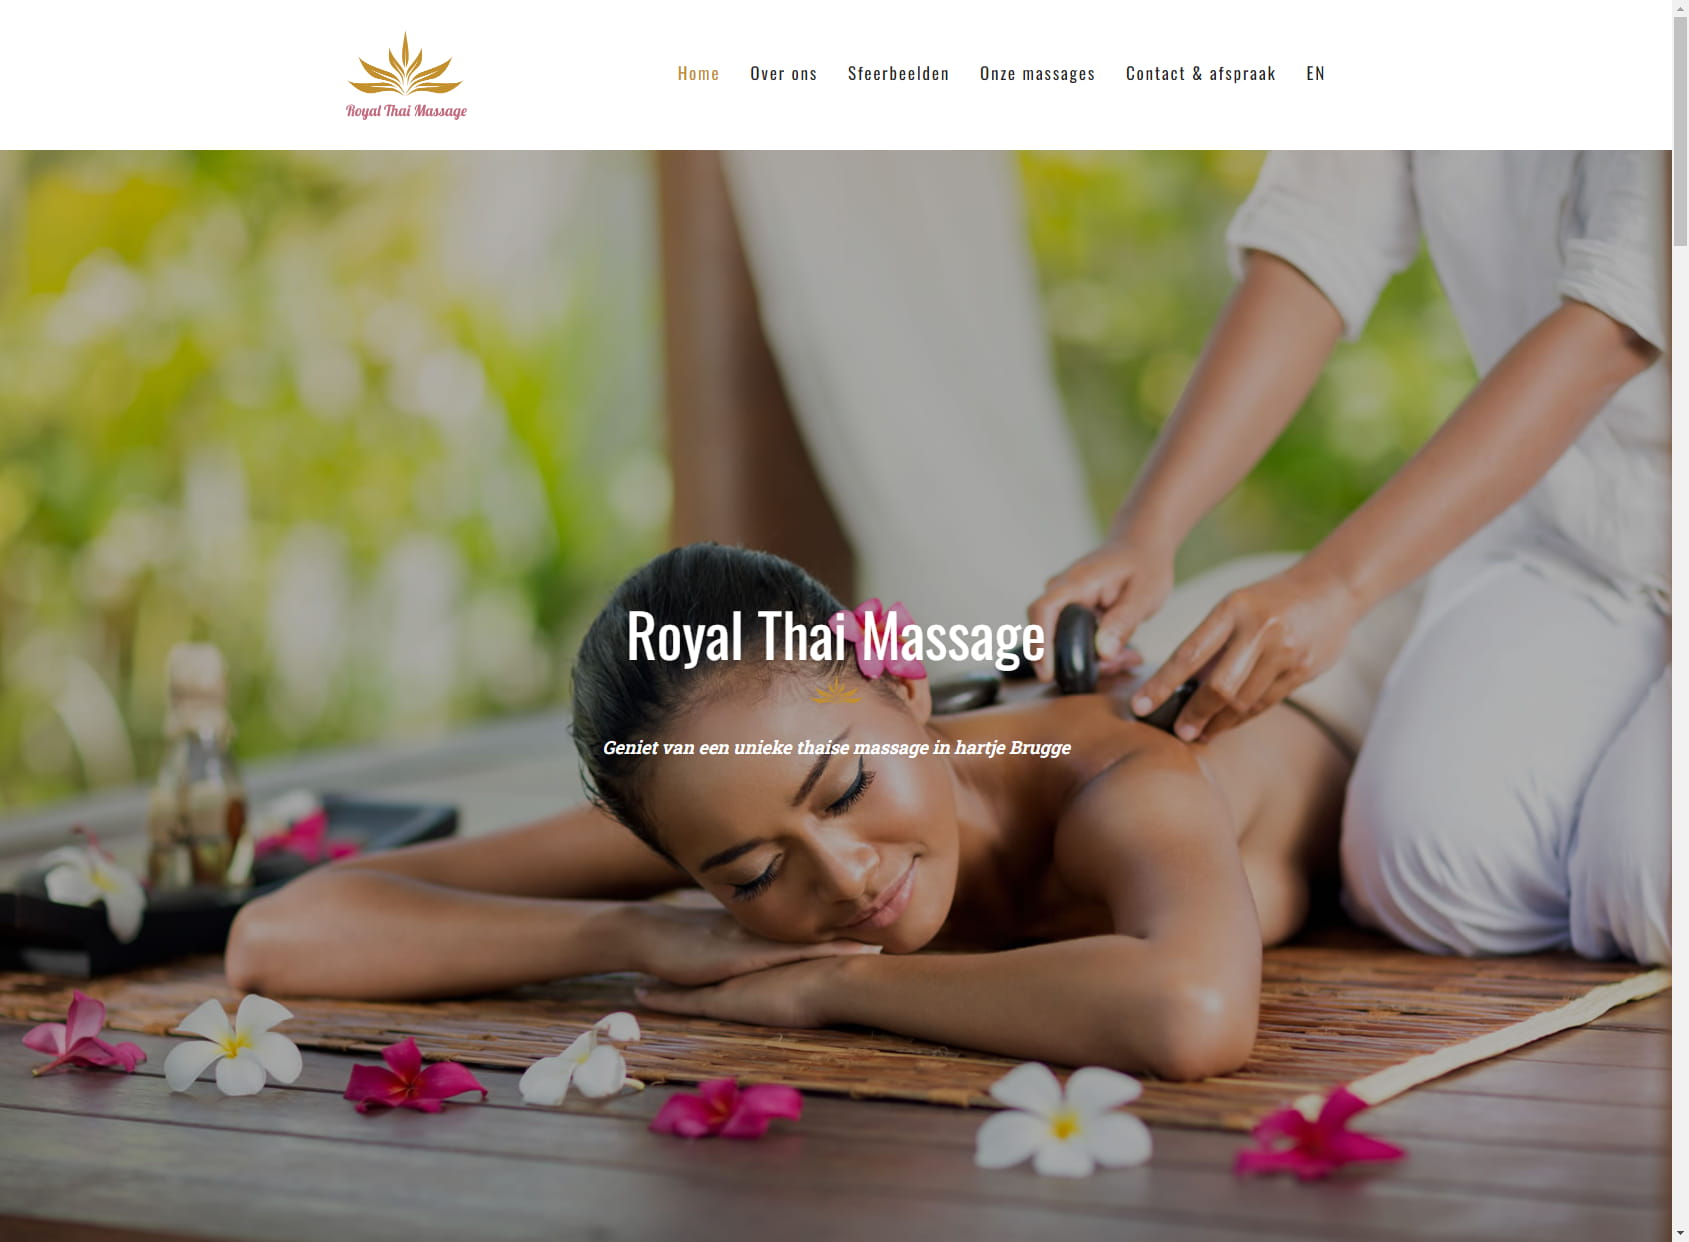 Royal Thai massage